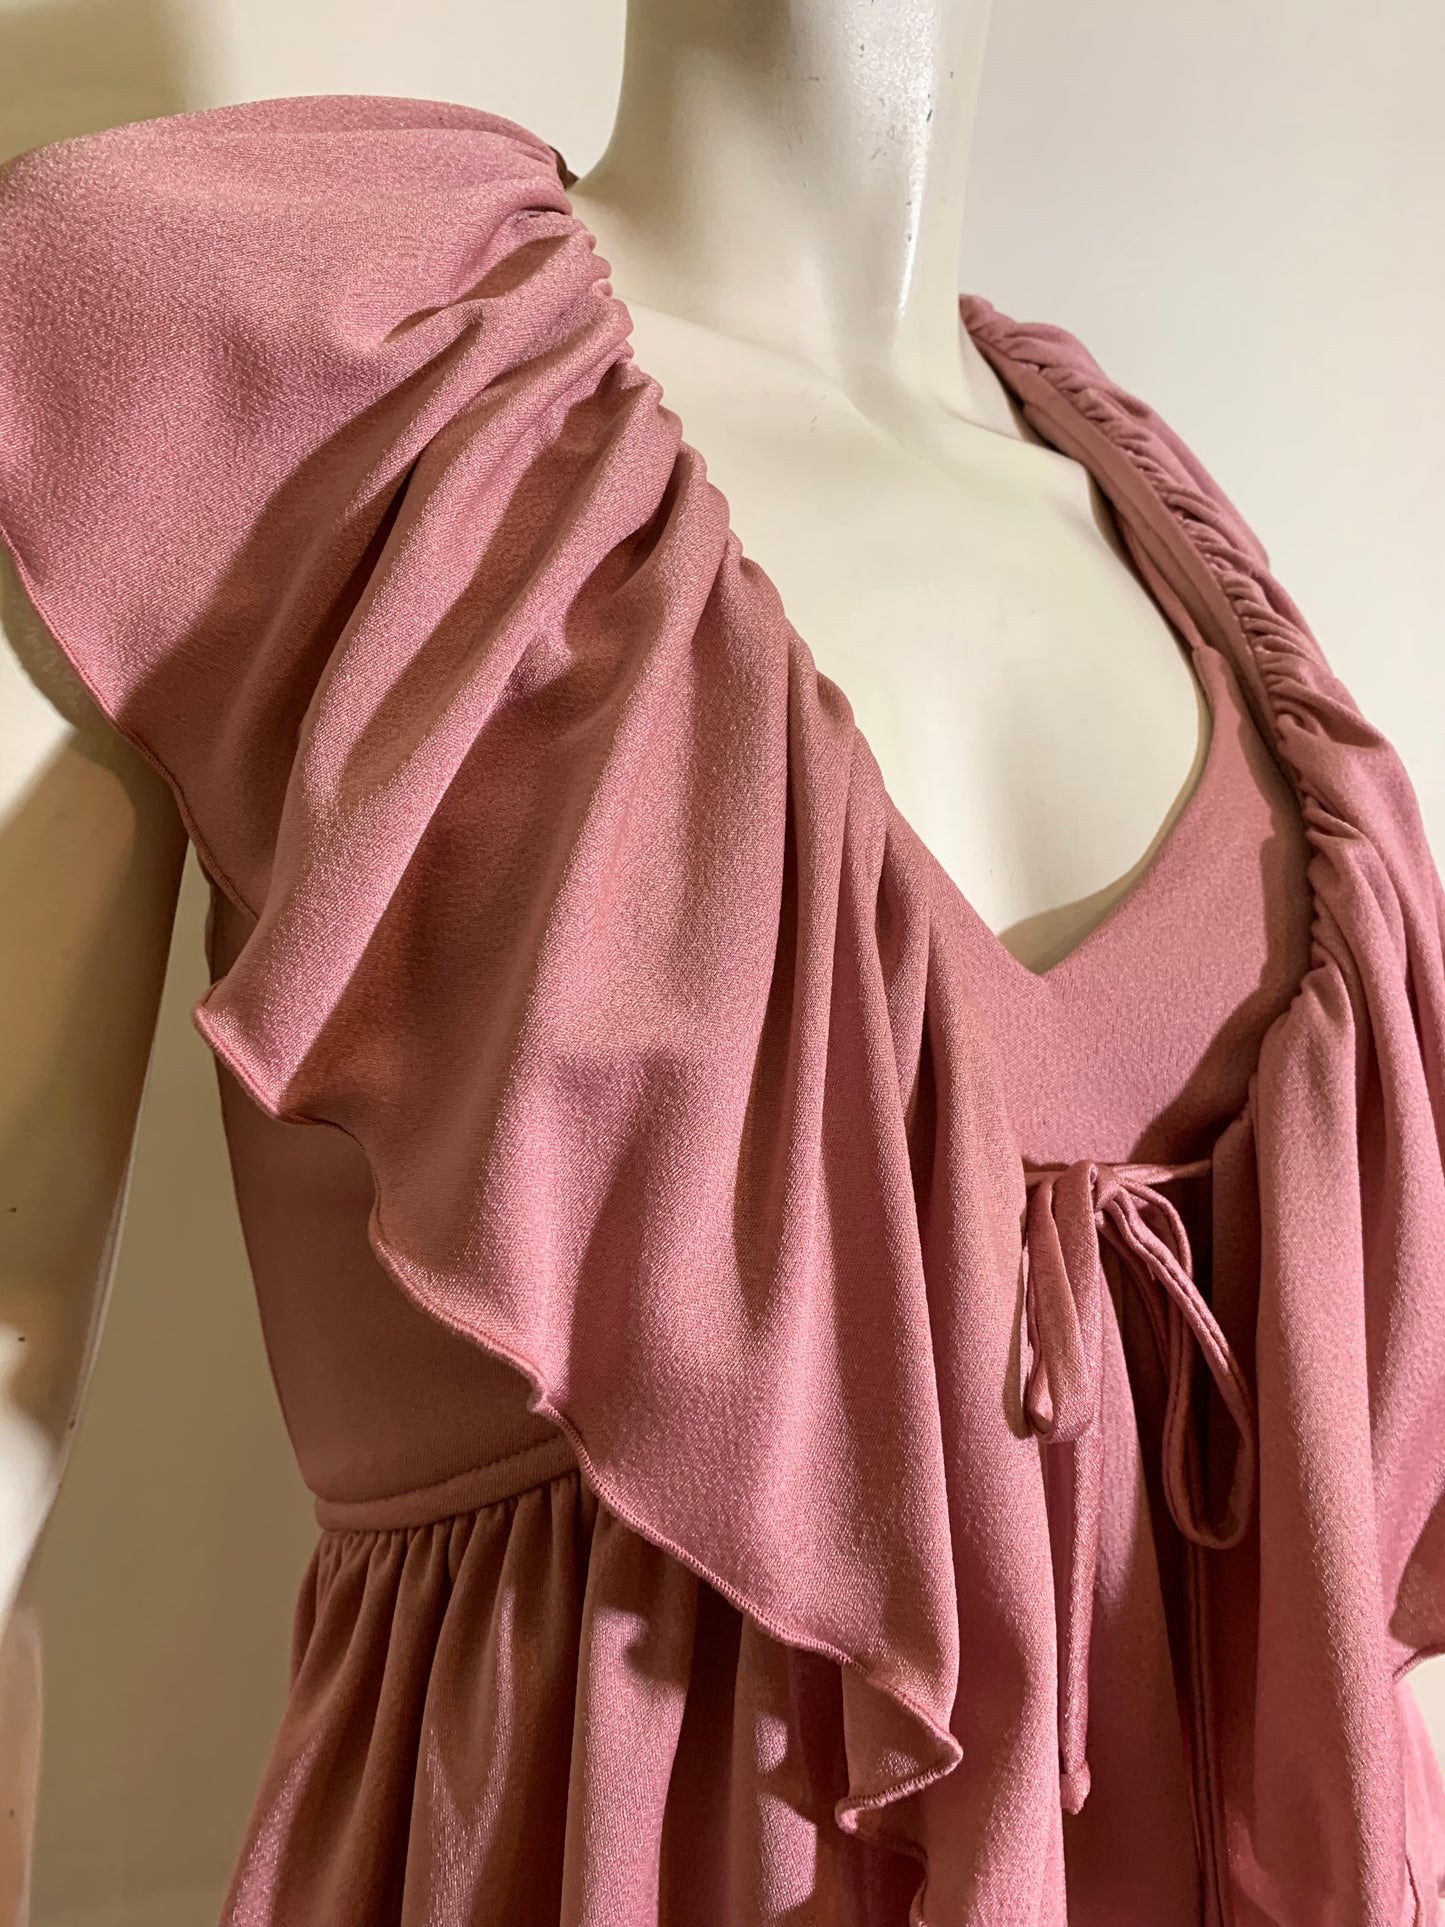 Violet Rose Crepe Nylon Disco Maxi Dress with Ruffled Jacket circa 1970s